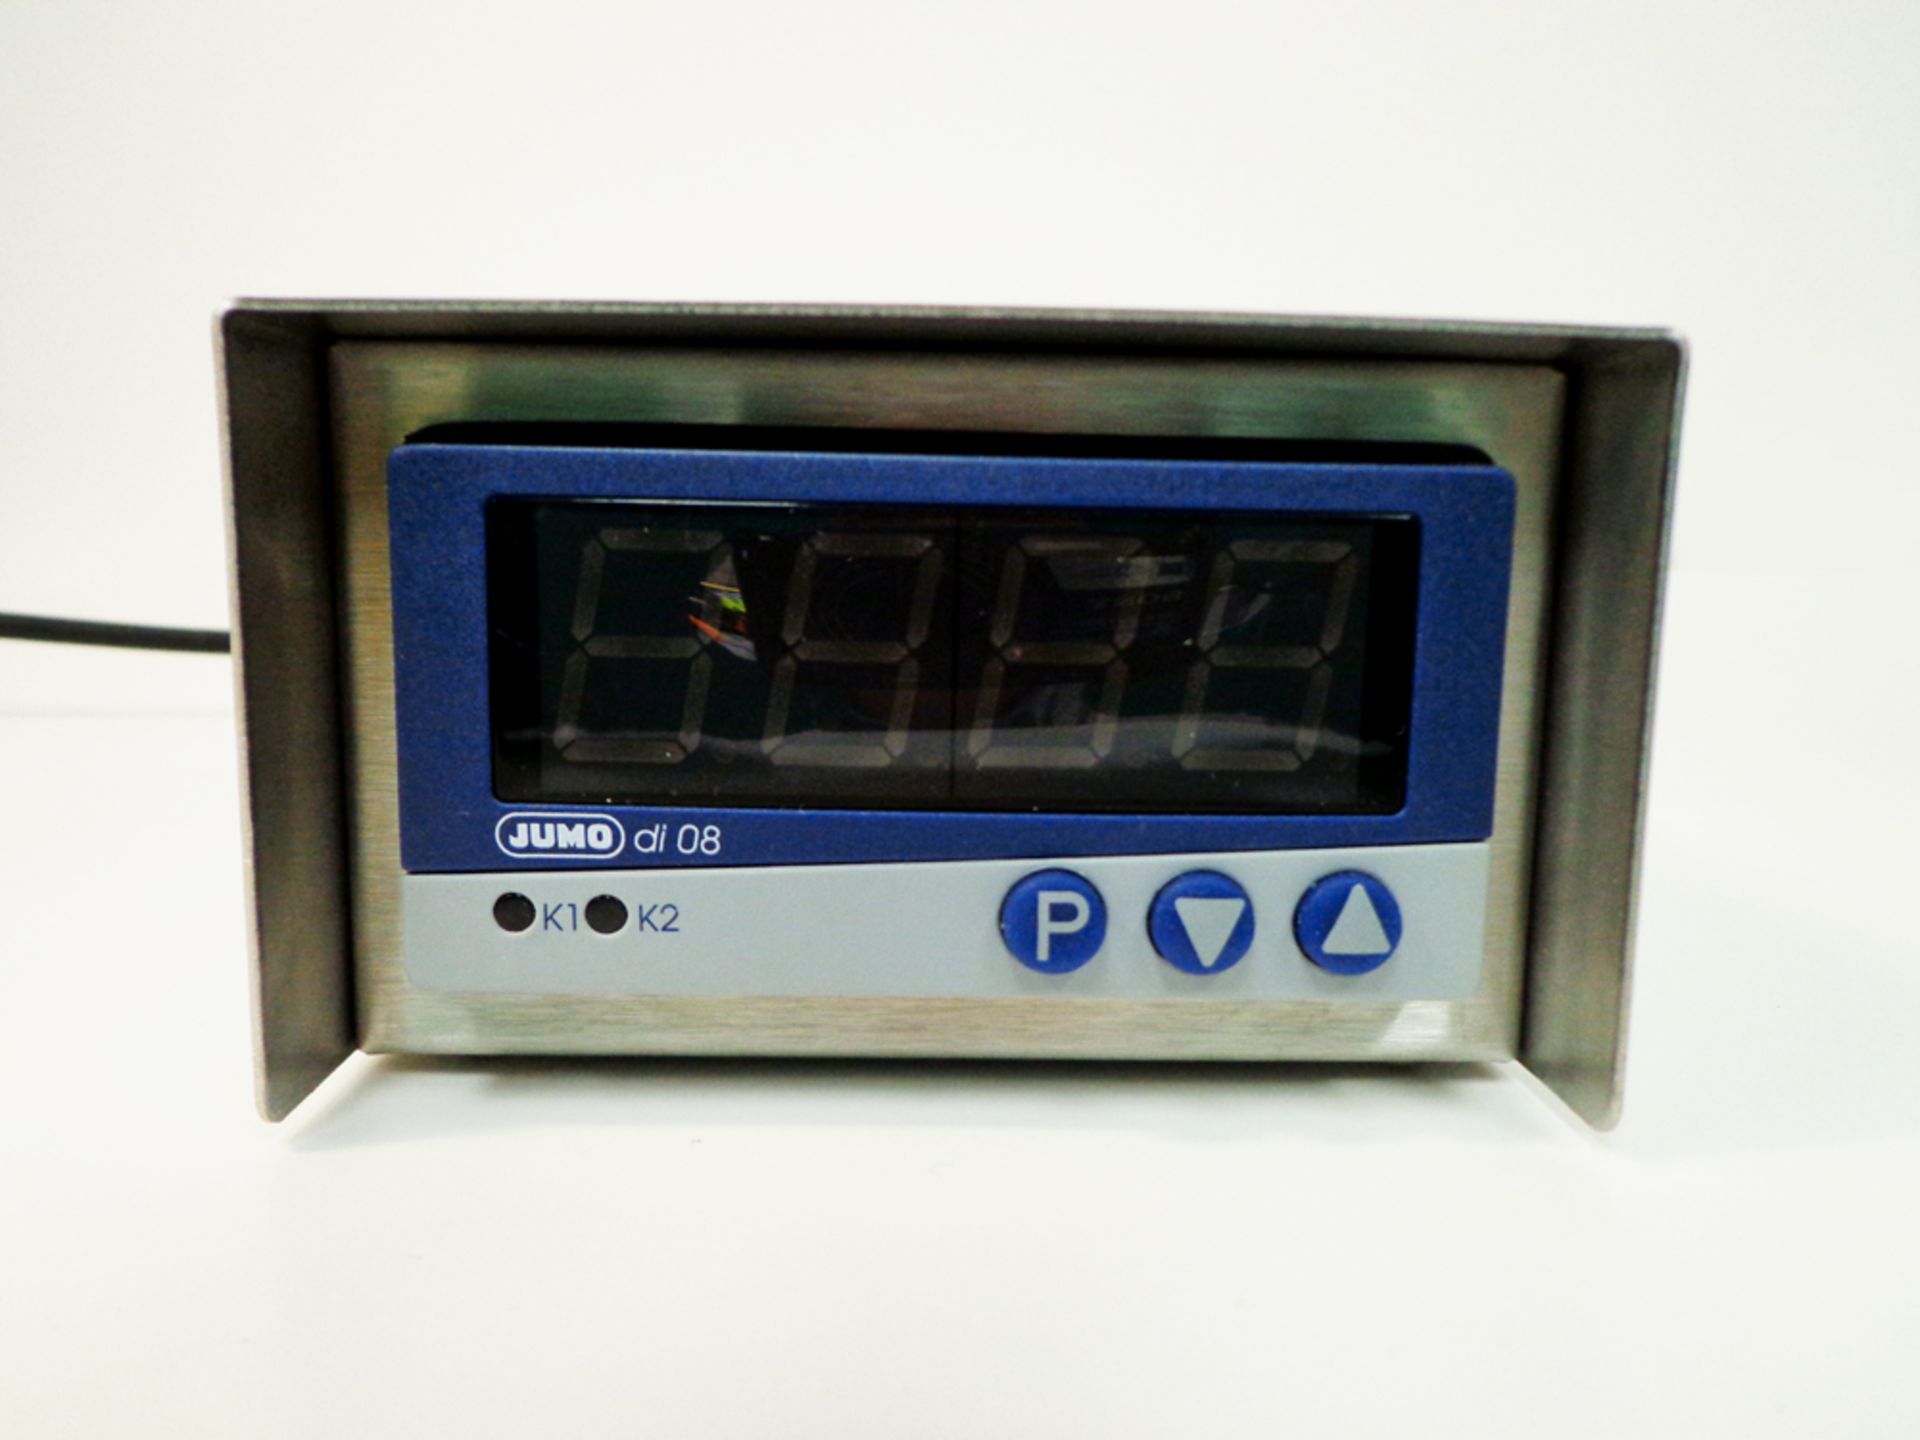 Hawco Temperature Display Panel - JUMO CL C8 Digital Indicator 701531, S/N 55980/16 - Image 4 of 5